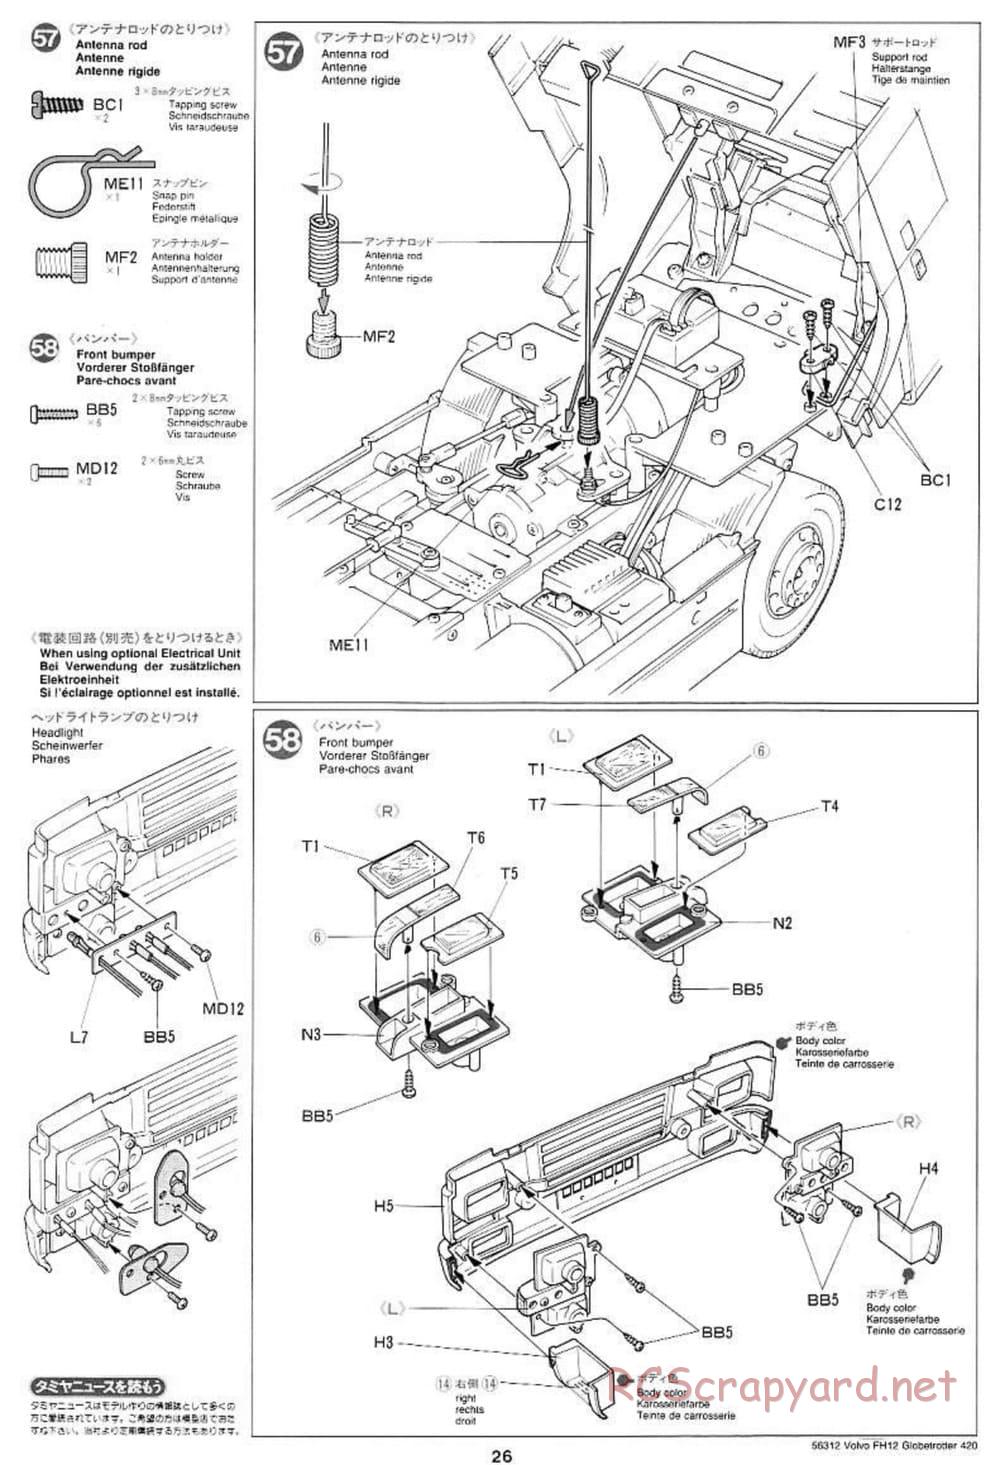 Tamiya - Volvo FH12 Globetrotter 420 - Manual - Page 26